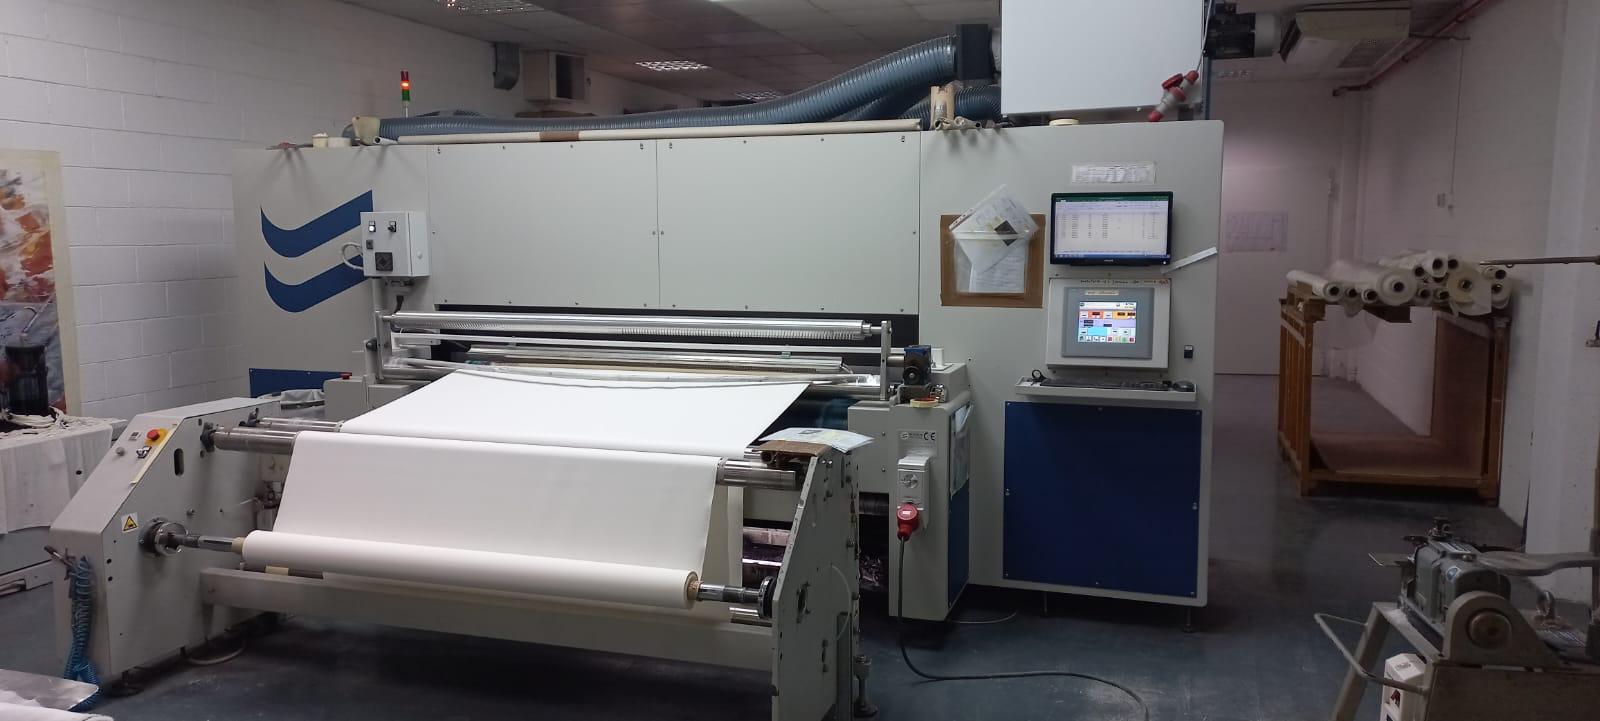 Used Reggiani digital printing in 1800mm